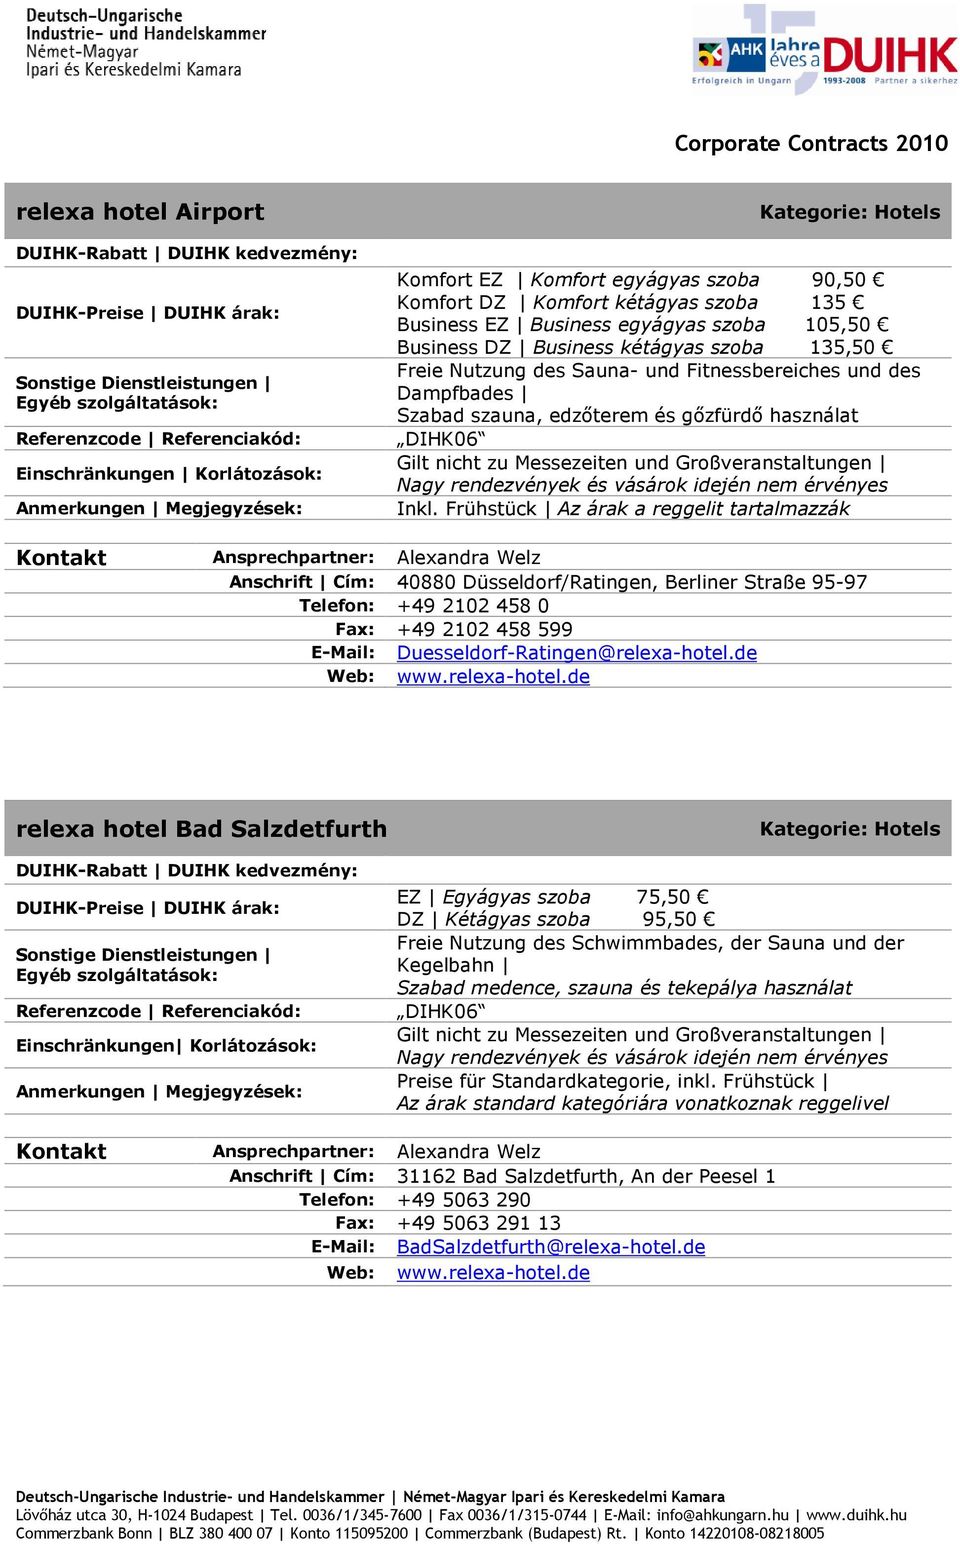 458 599 E-Mail: Duesseldorf-Ratingen@relexa-hotel.